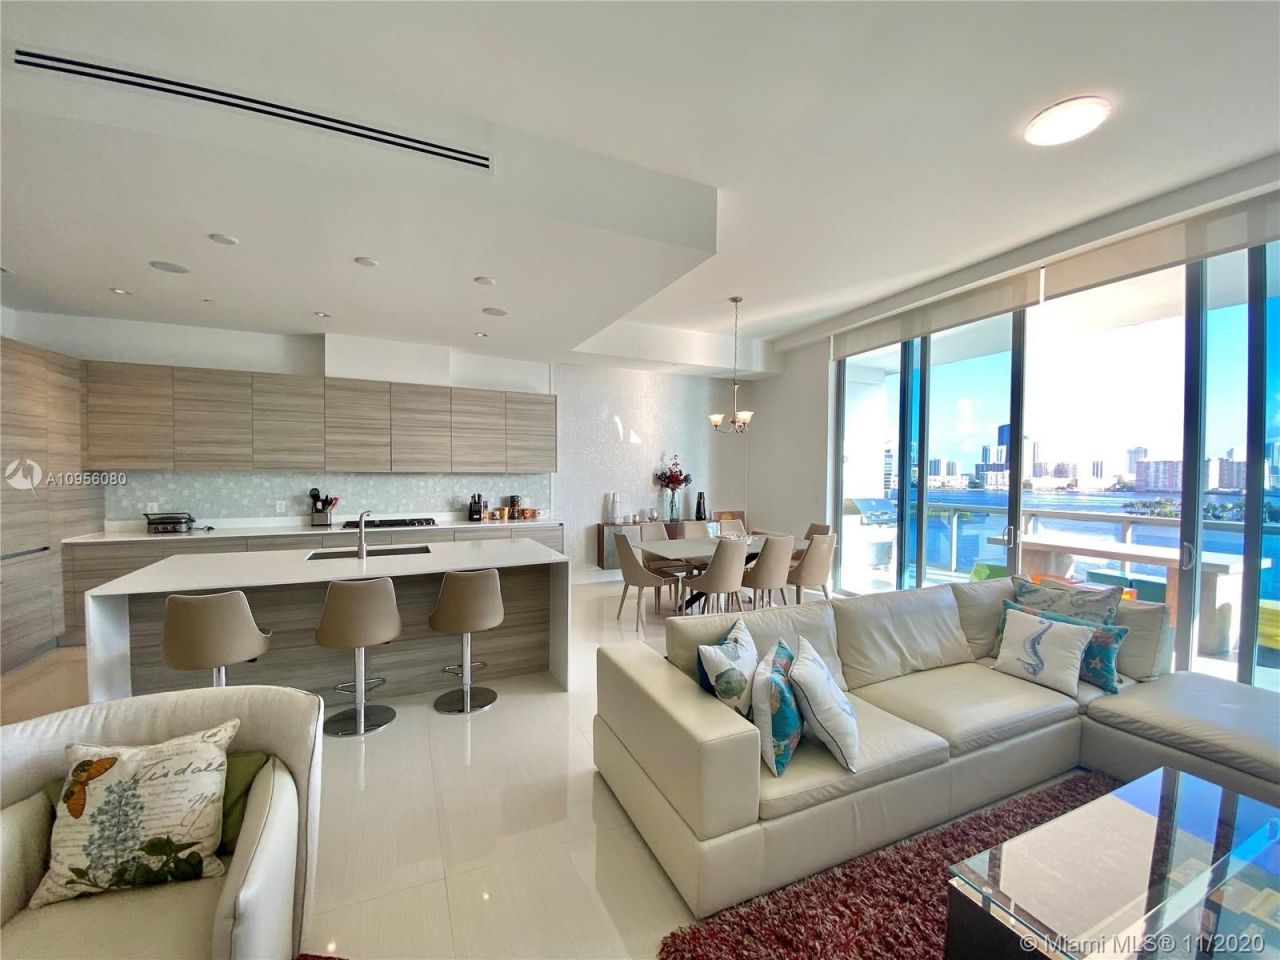 Penthouse in Miami, USA, 240 m² - Foto 1